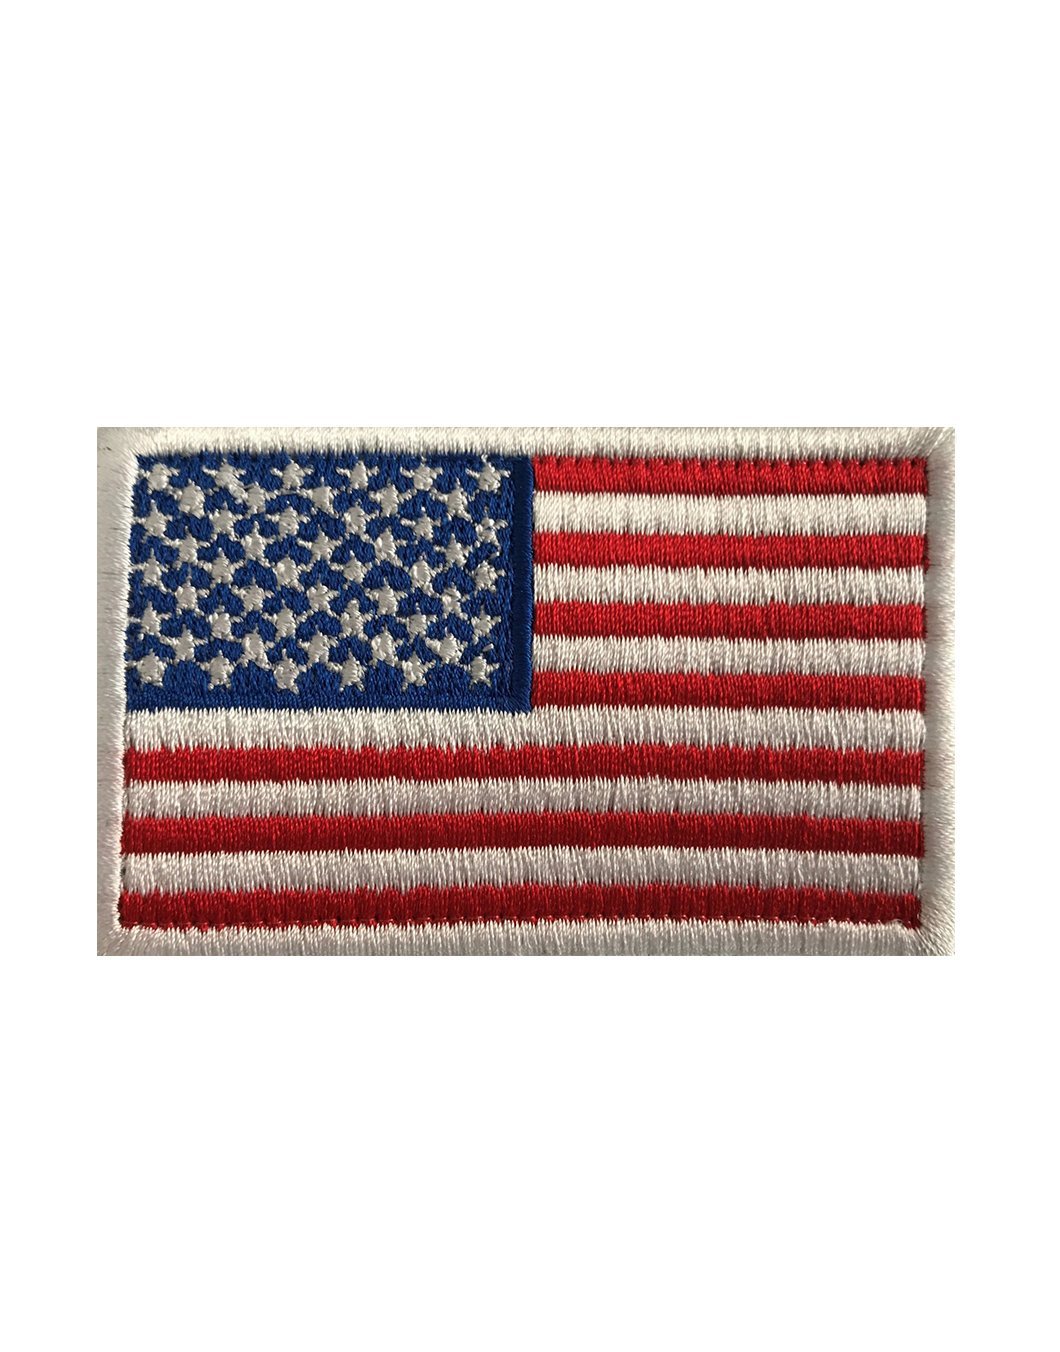 USA Flag Patch - Velcro